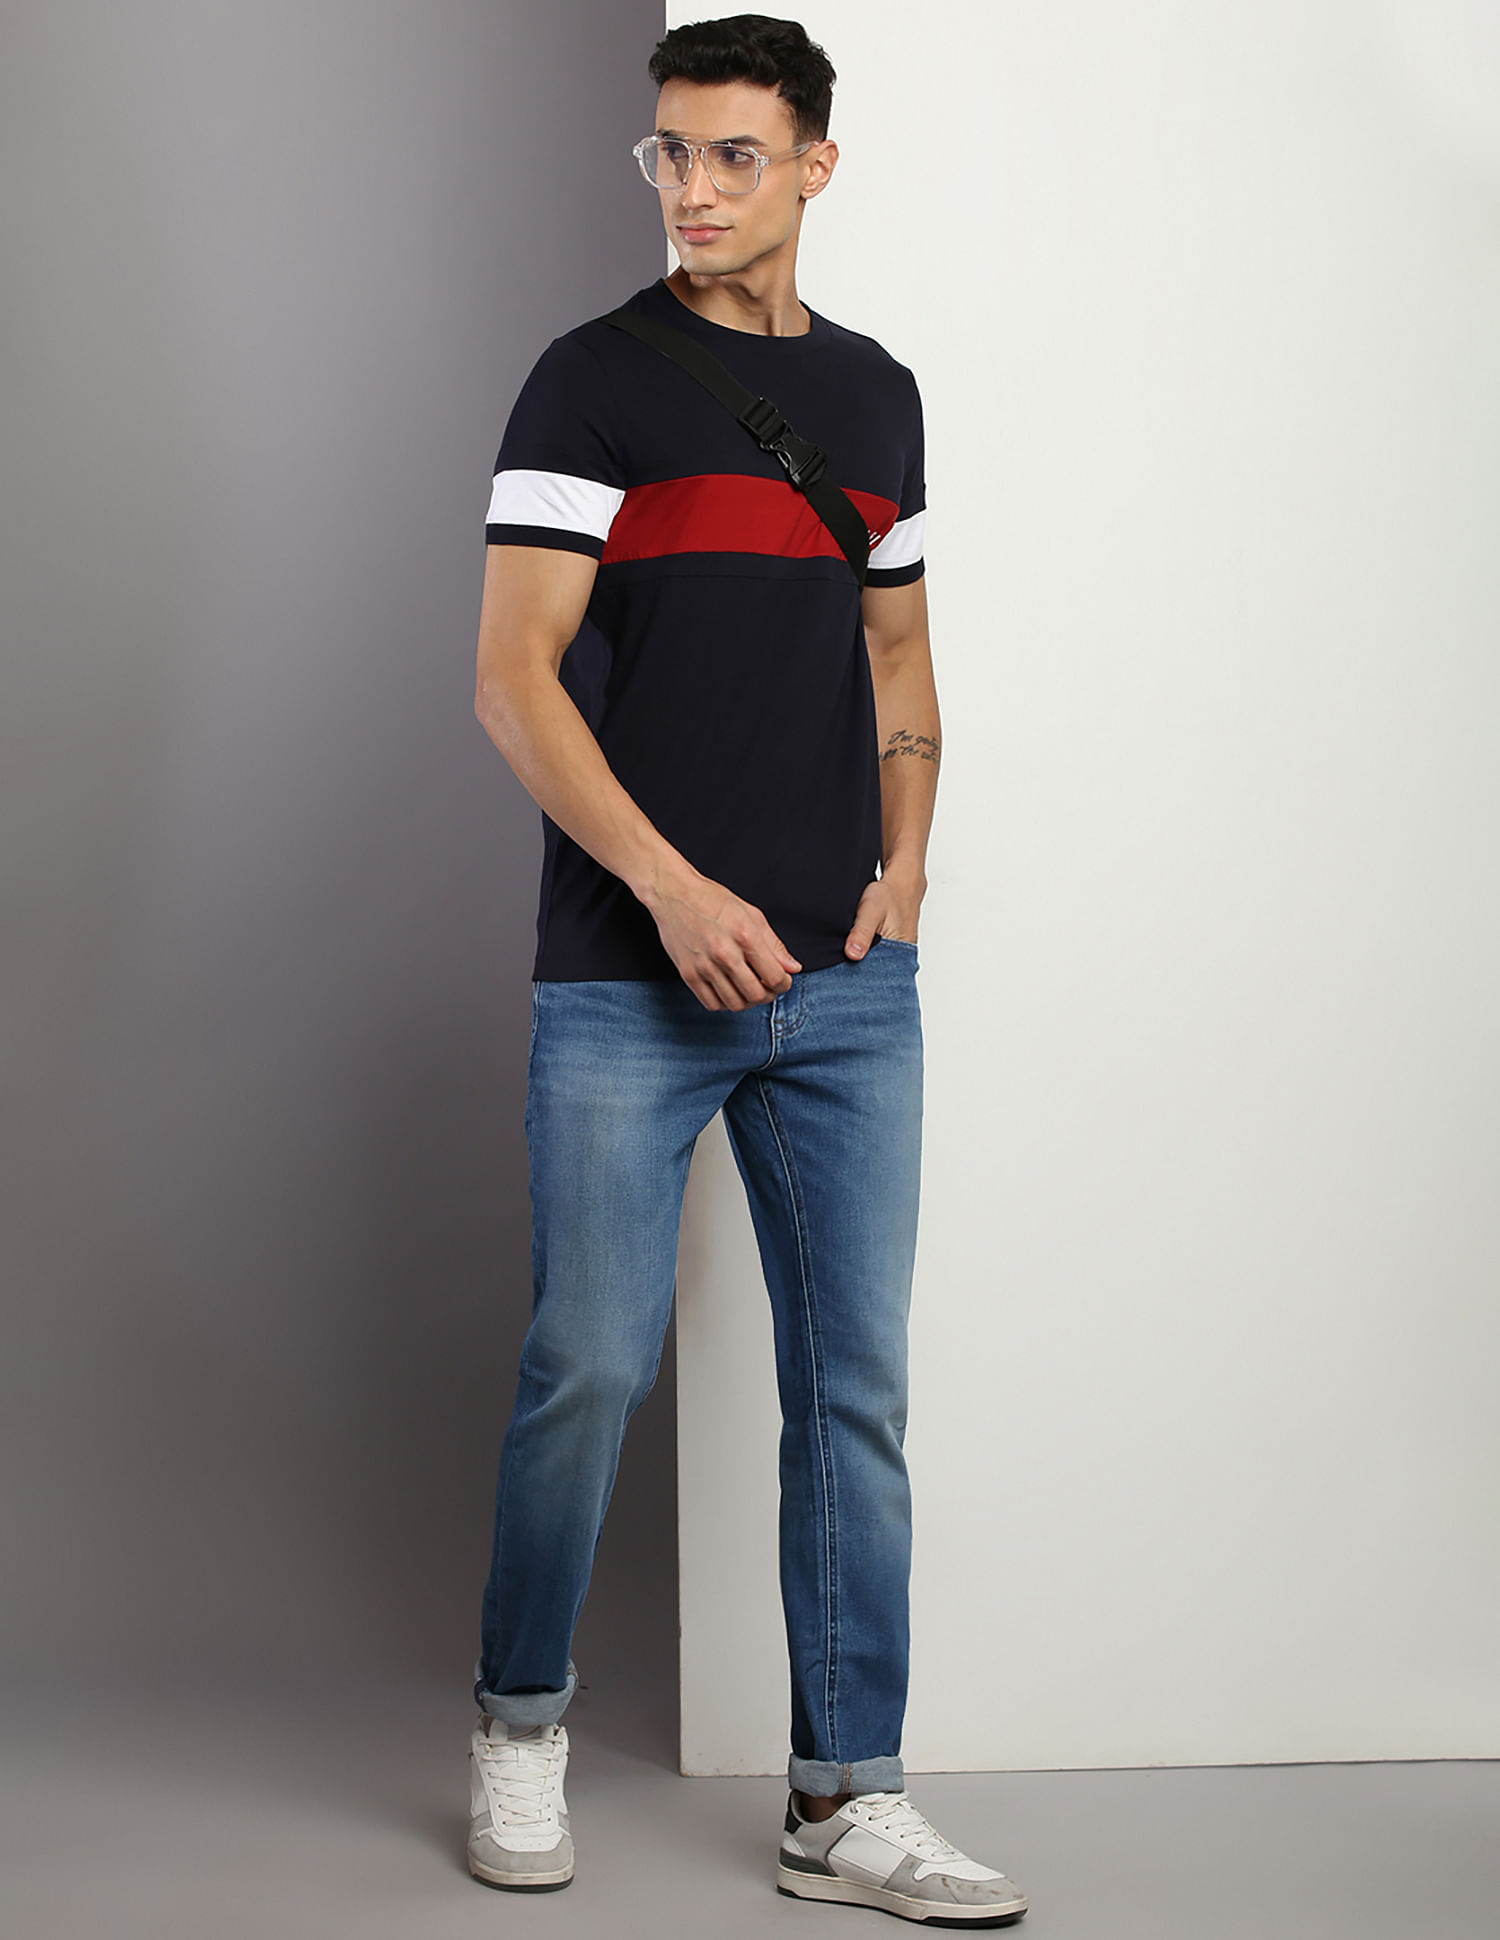 Tommy Hilfiger Transitional Cotton Colour Block T-Shirt NNNOW.com